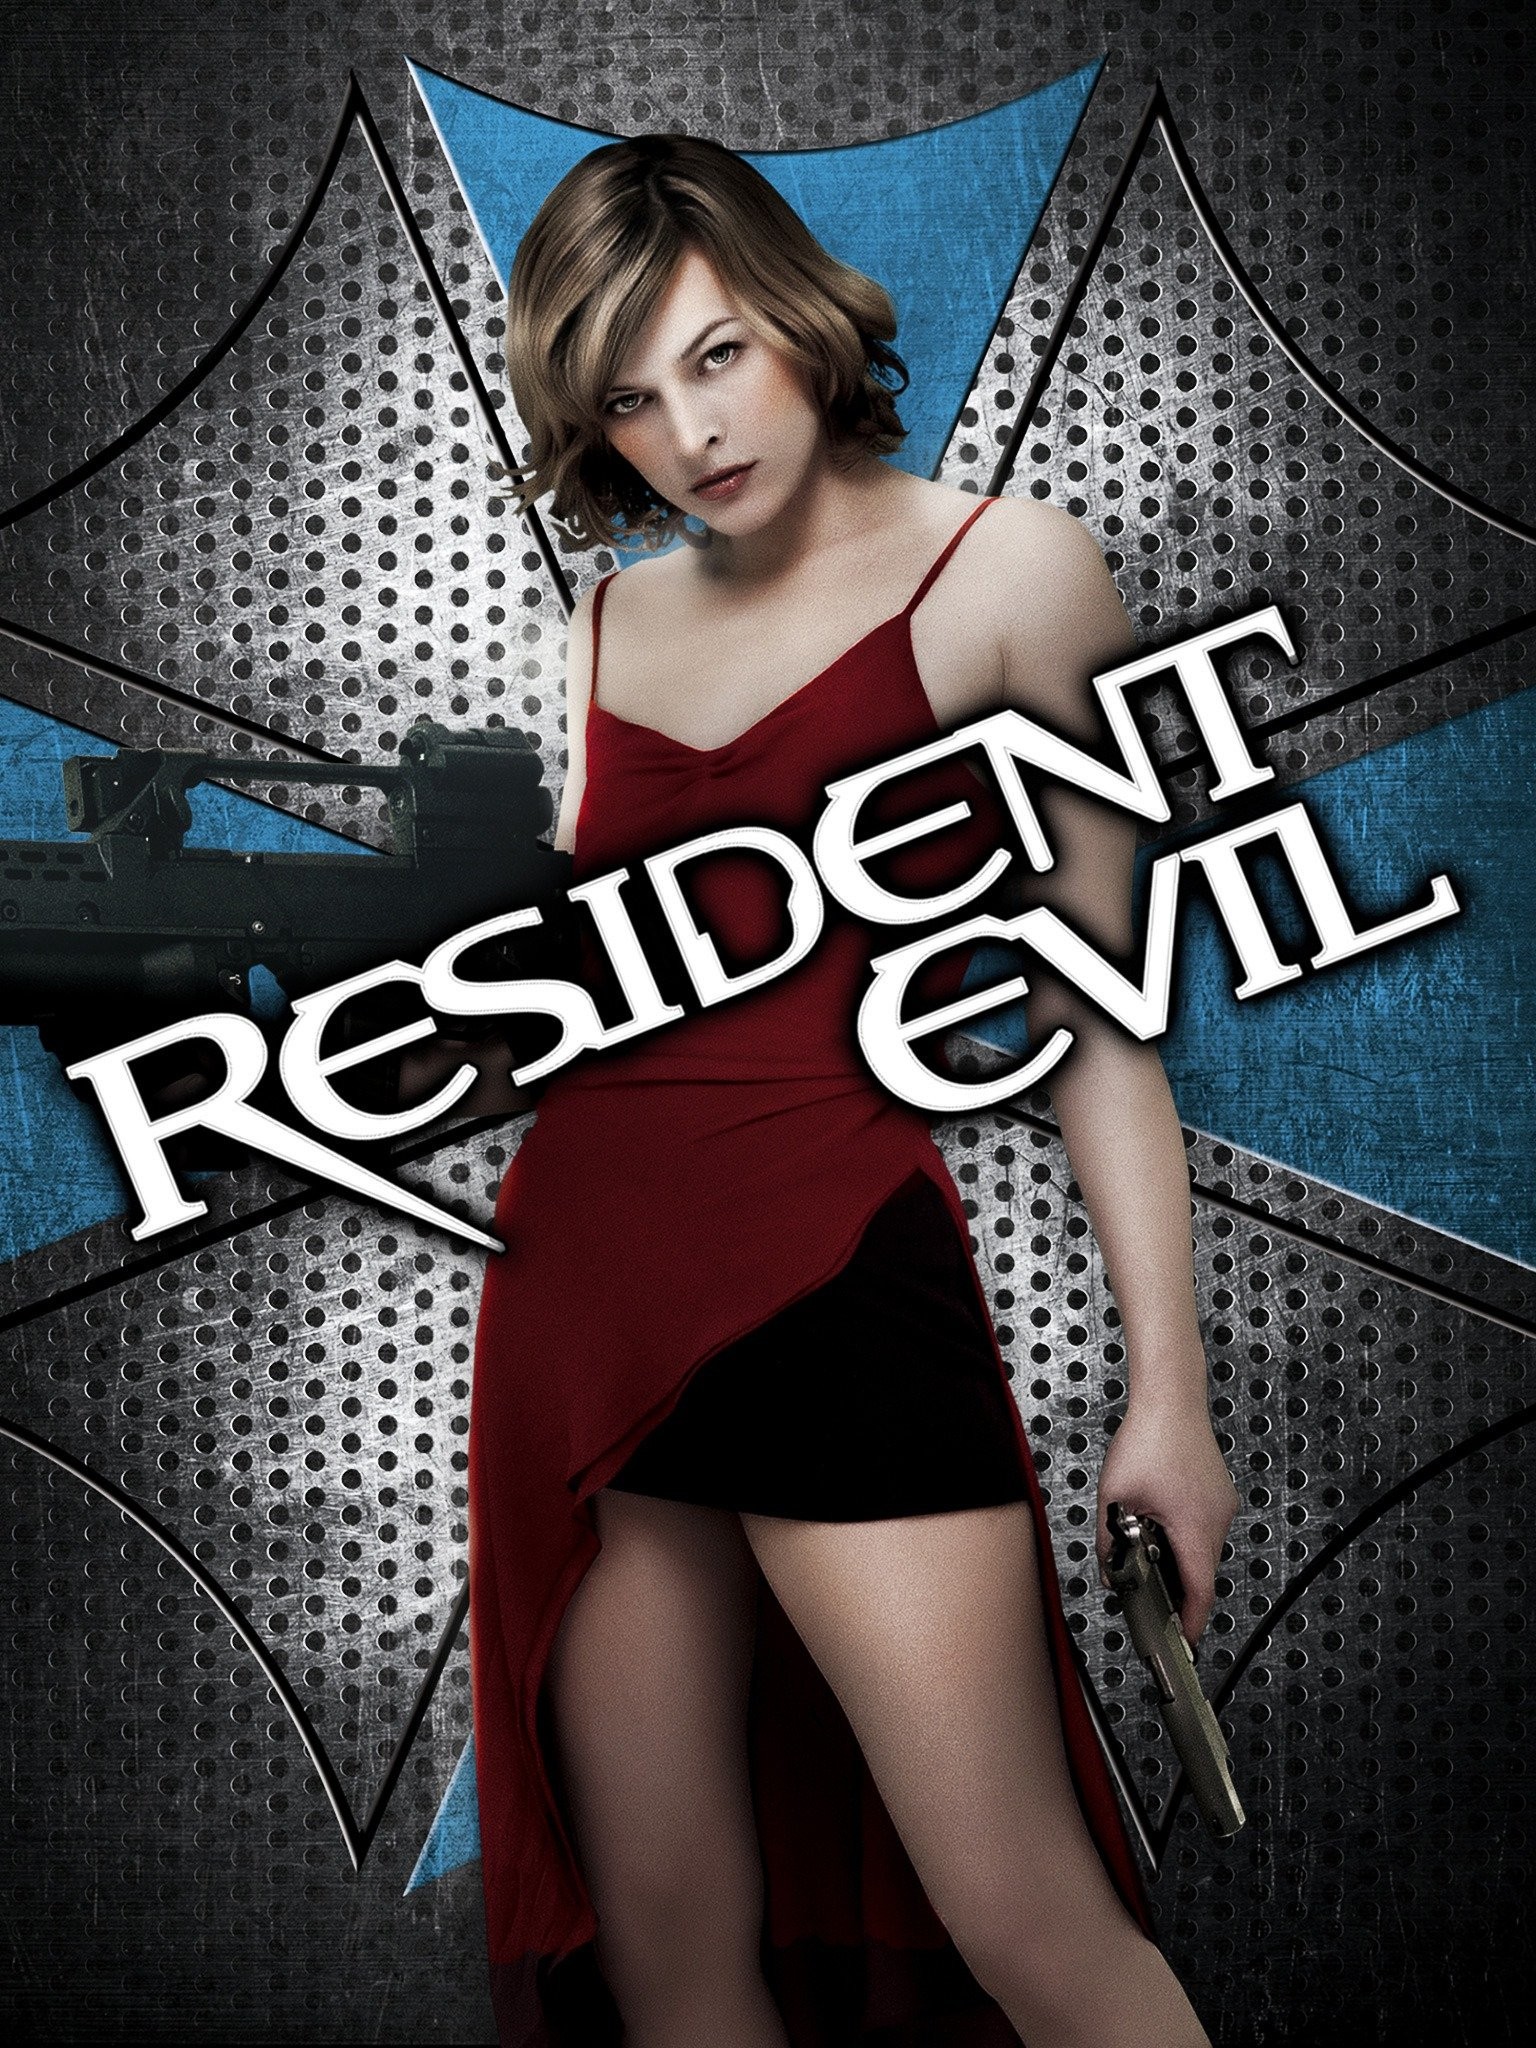 Live action Mr. X Resident Evil fan cast : r/gaming